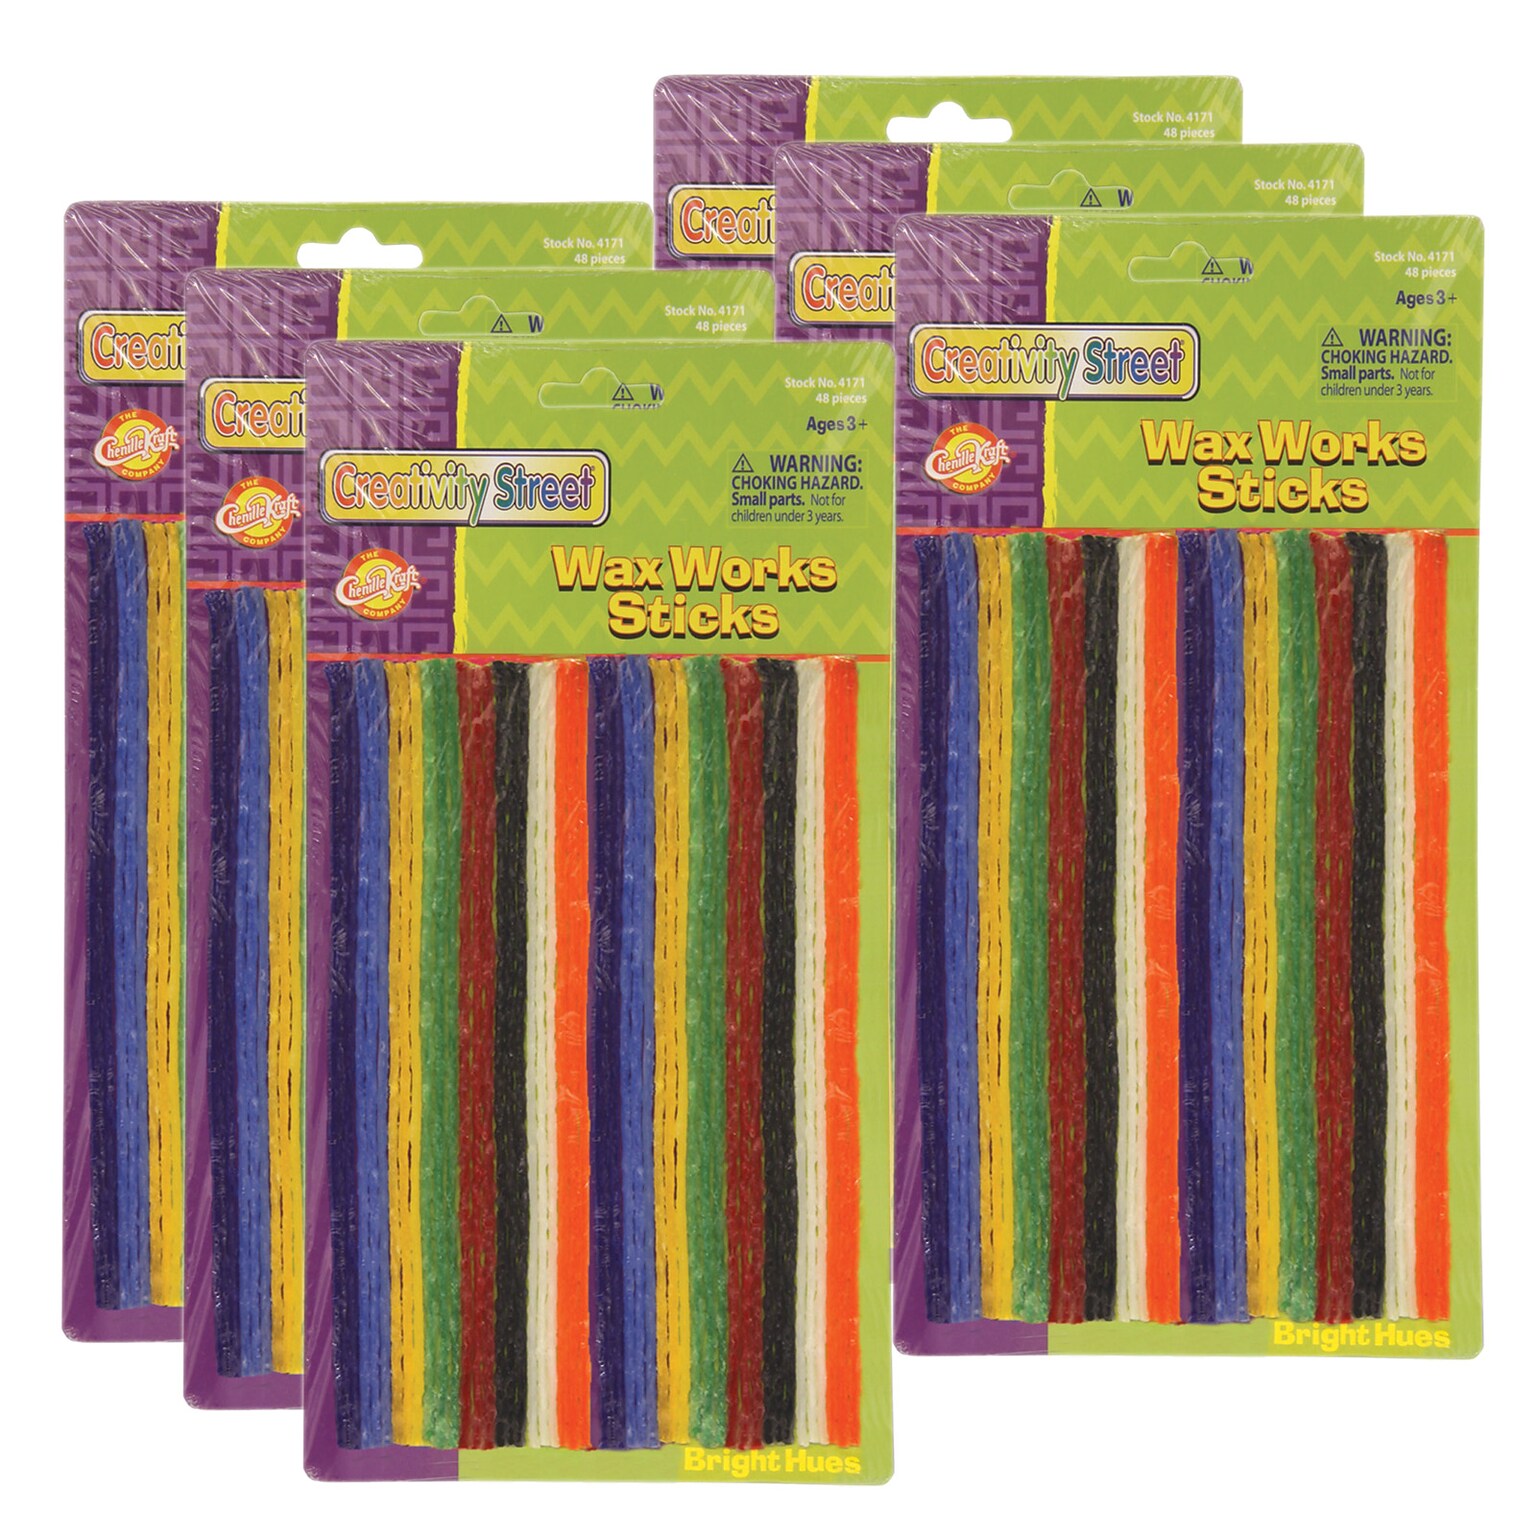 Creativity Street Wax Works Sticks, Assorted Bright Hues, 8, 48 Per Pack, 6 Packs (PACAC4170-6)